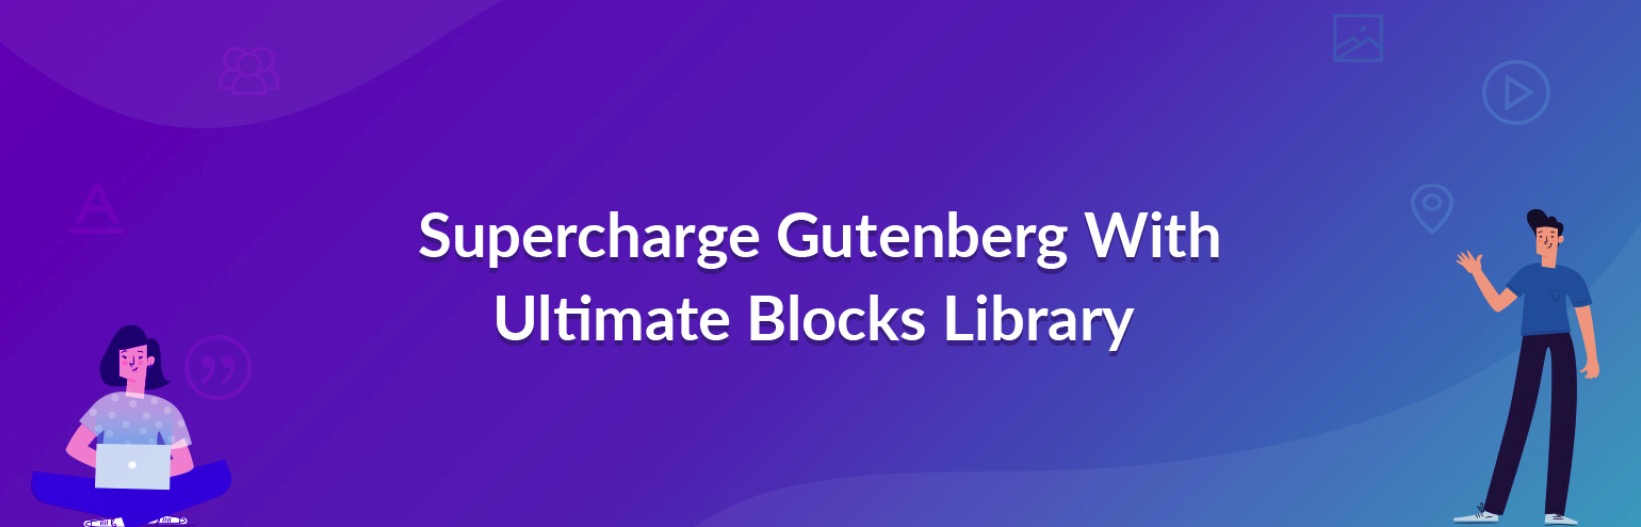 Ultimate Addons for Gutenberg